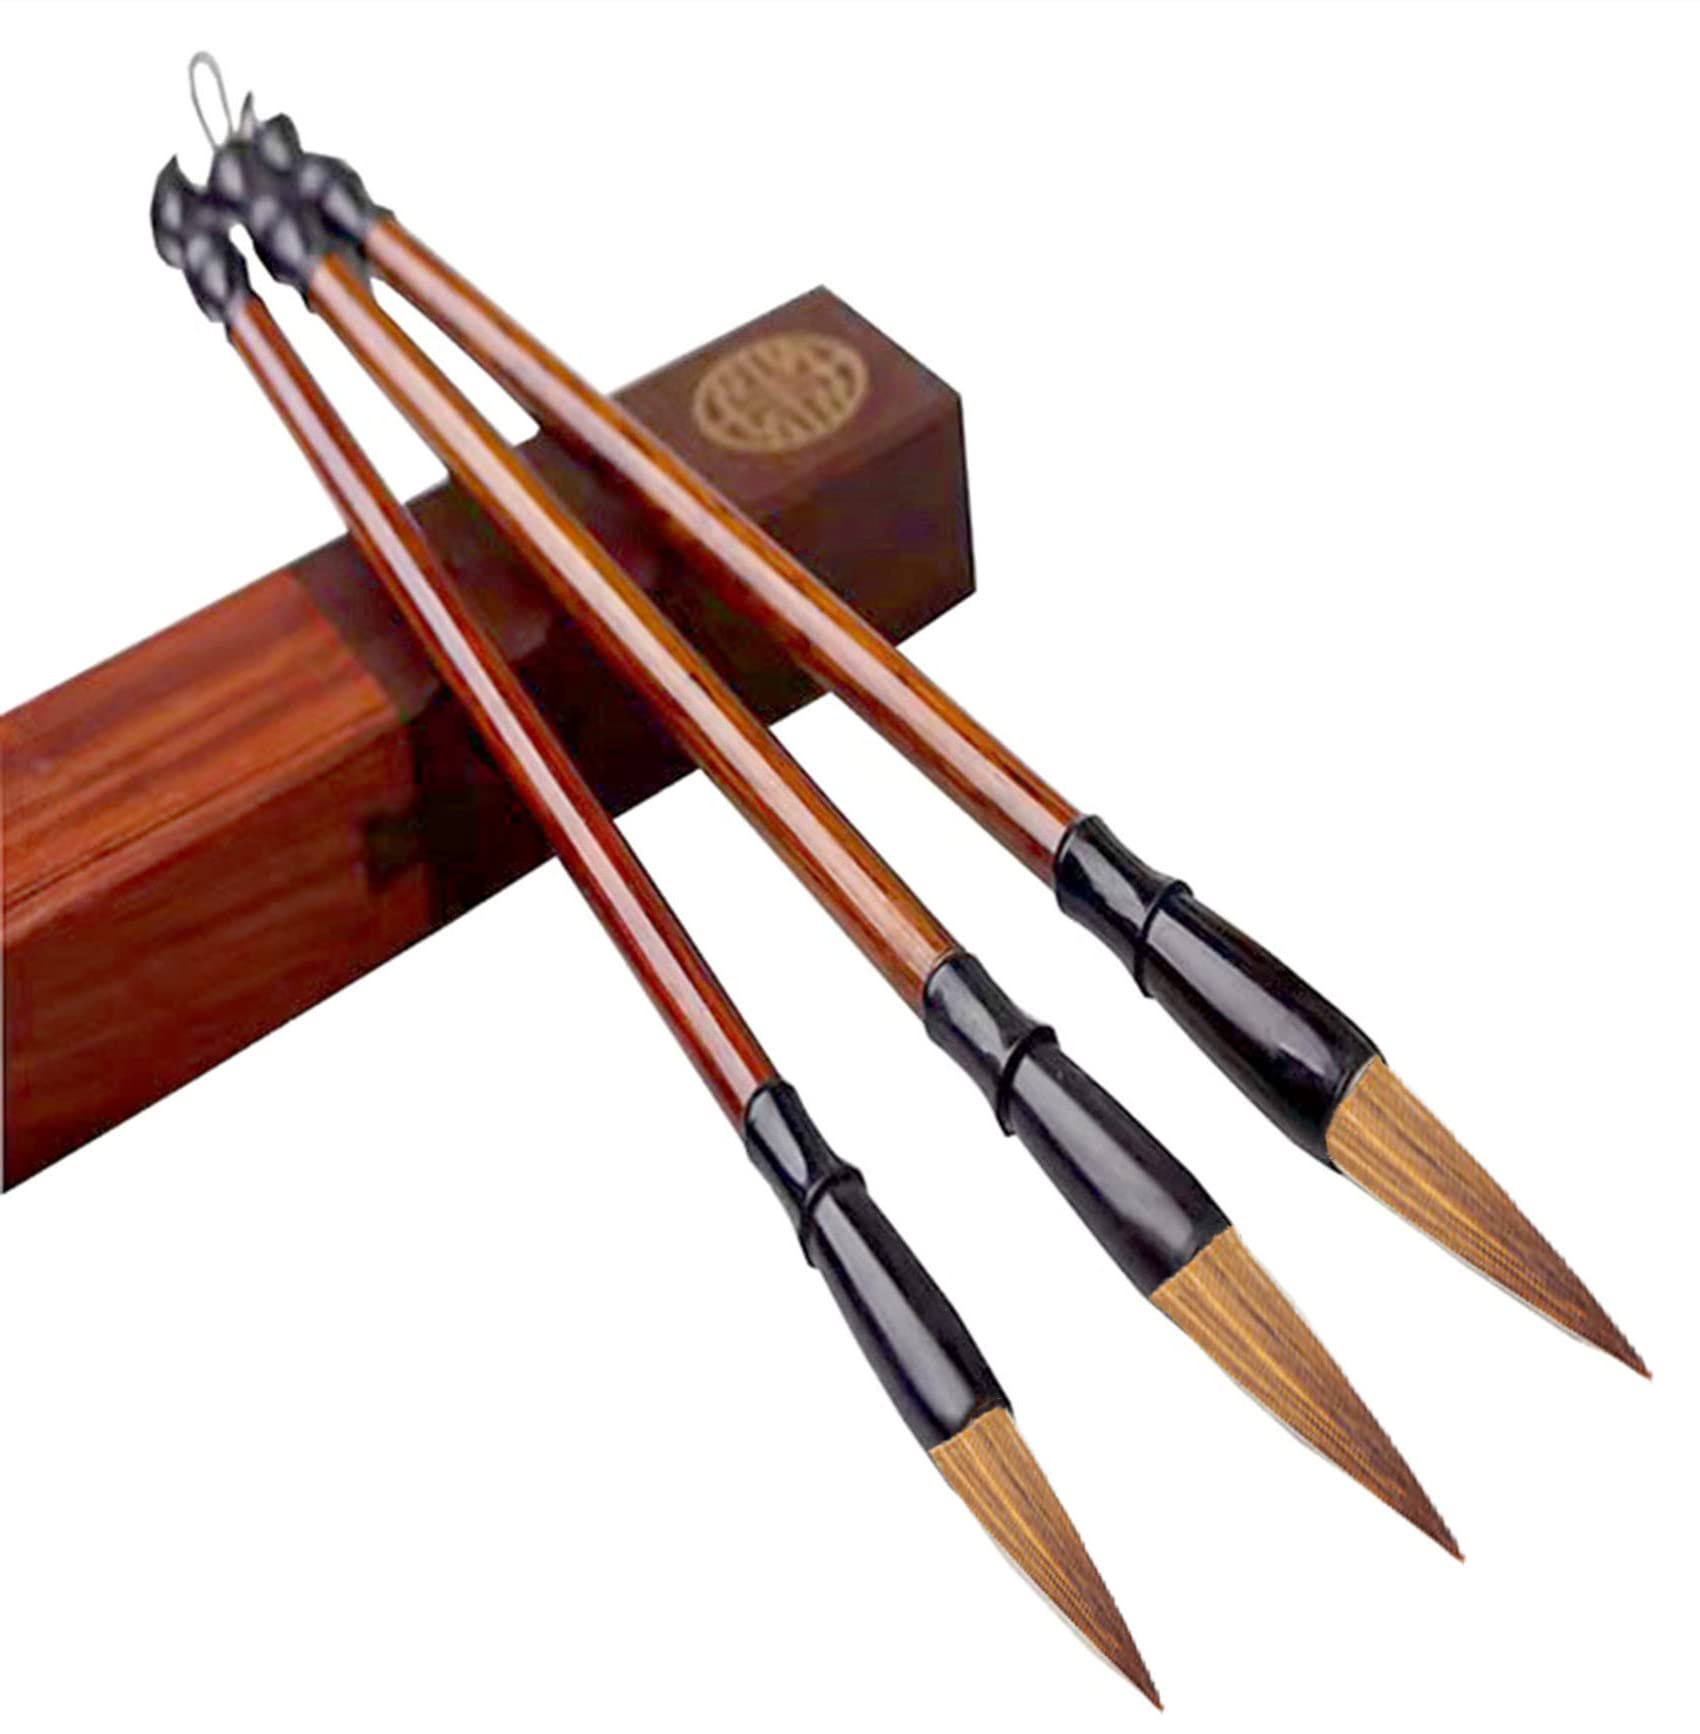 3x Chinese Japanese Calligraphy Brush Pen L/m/s Script Nib Draw